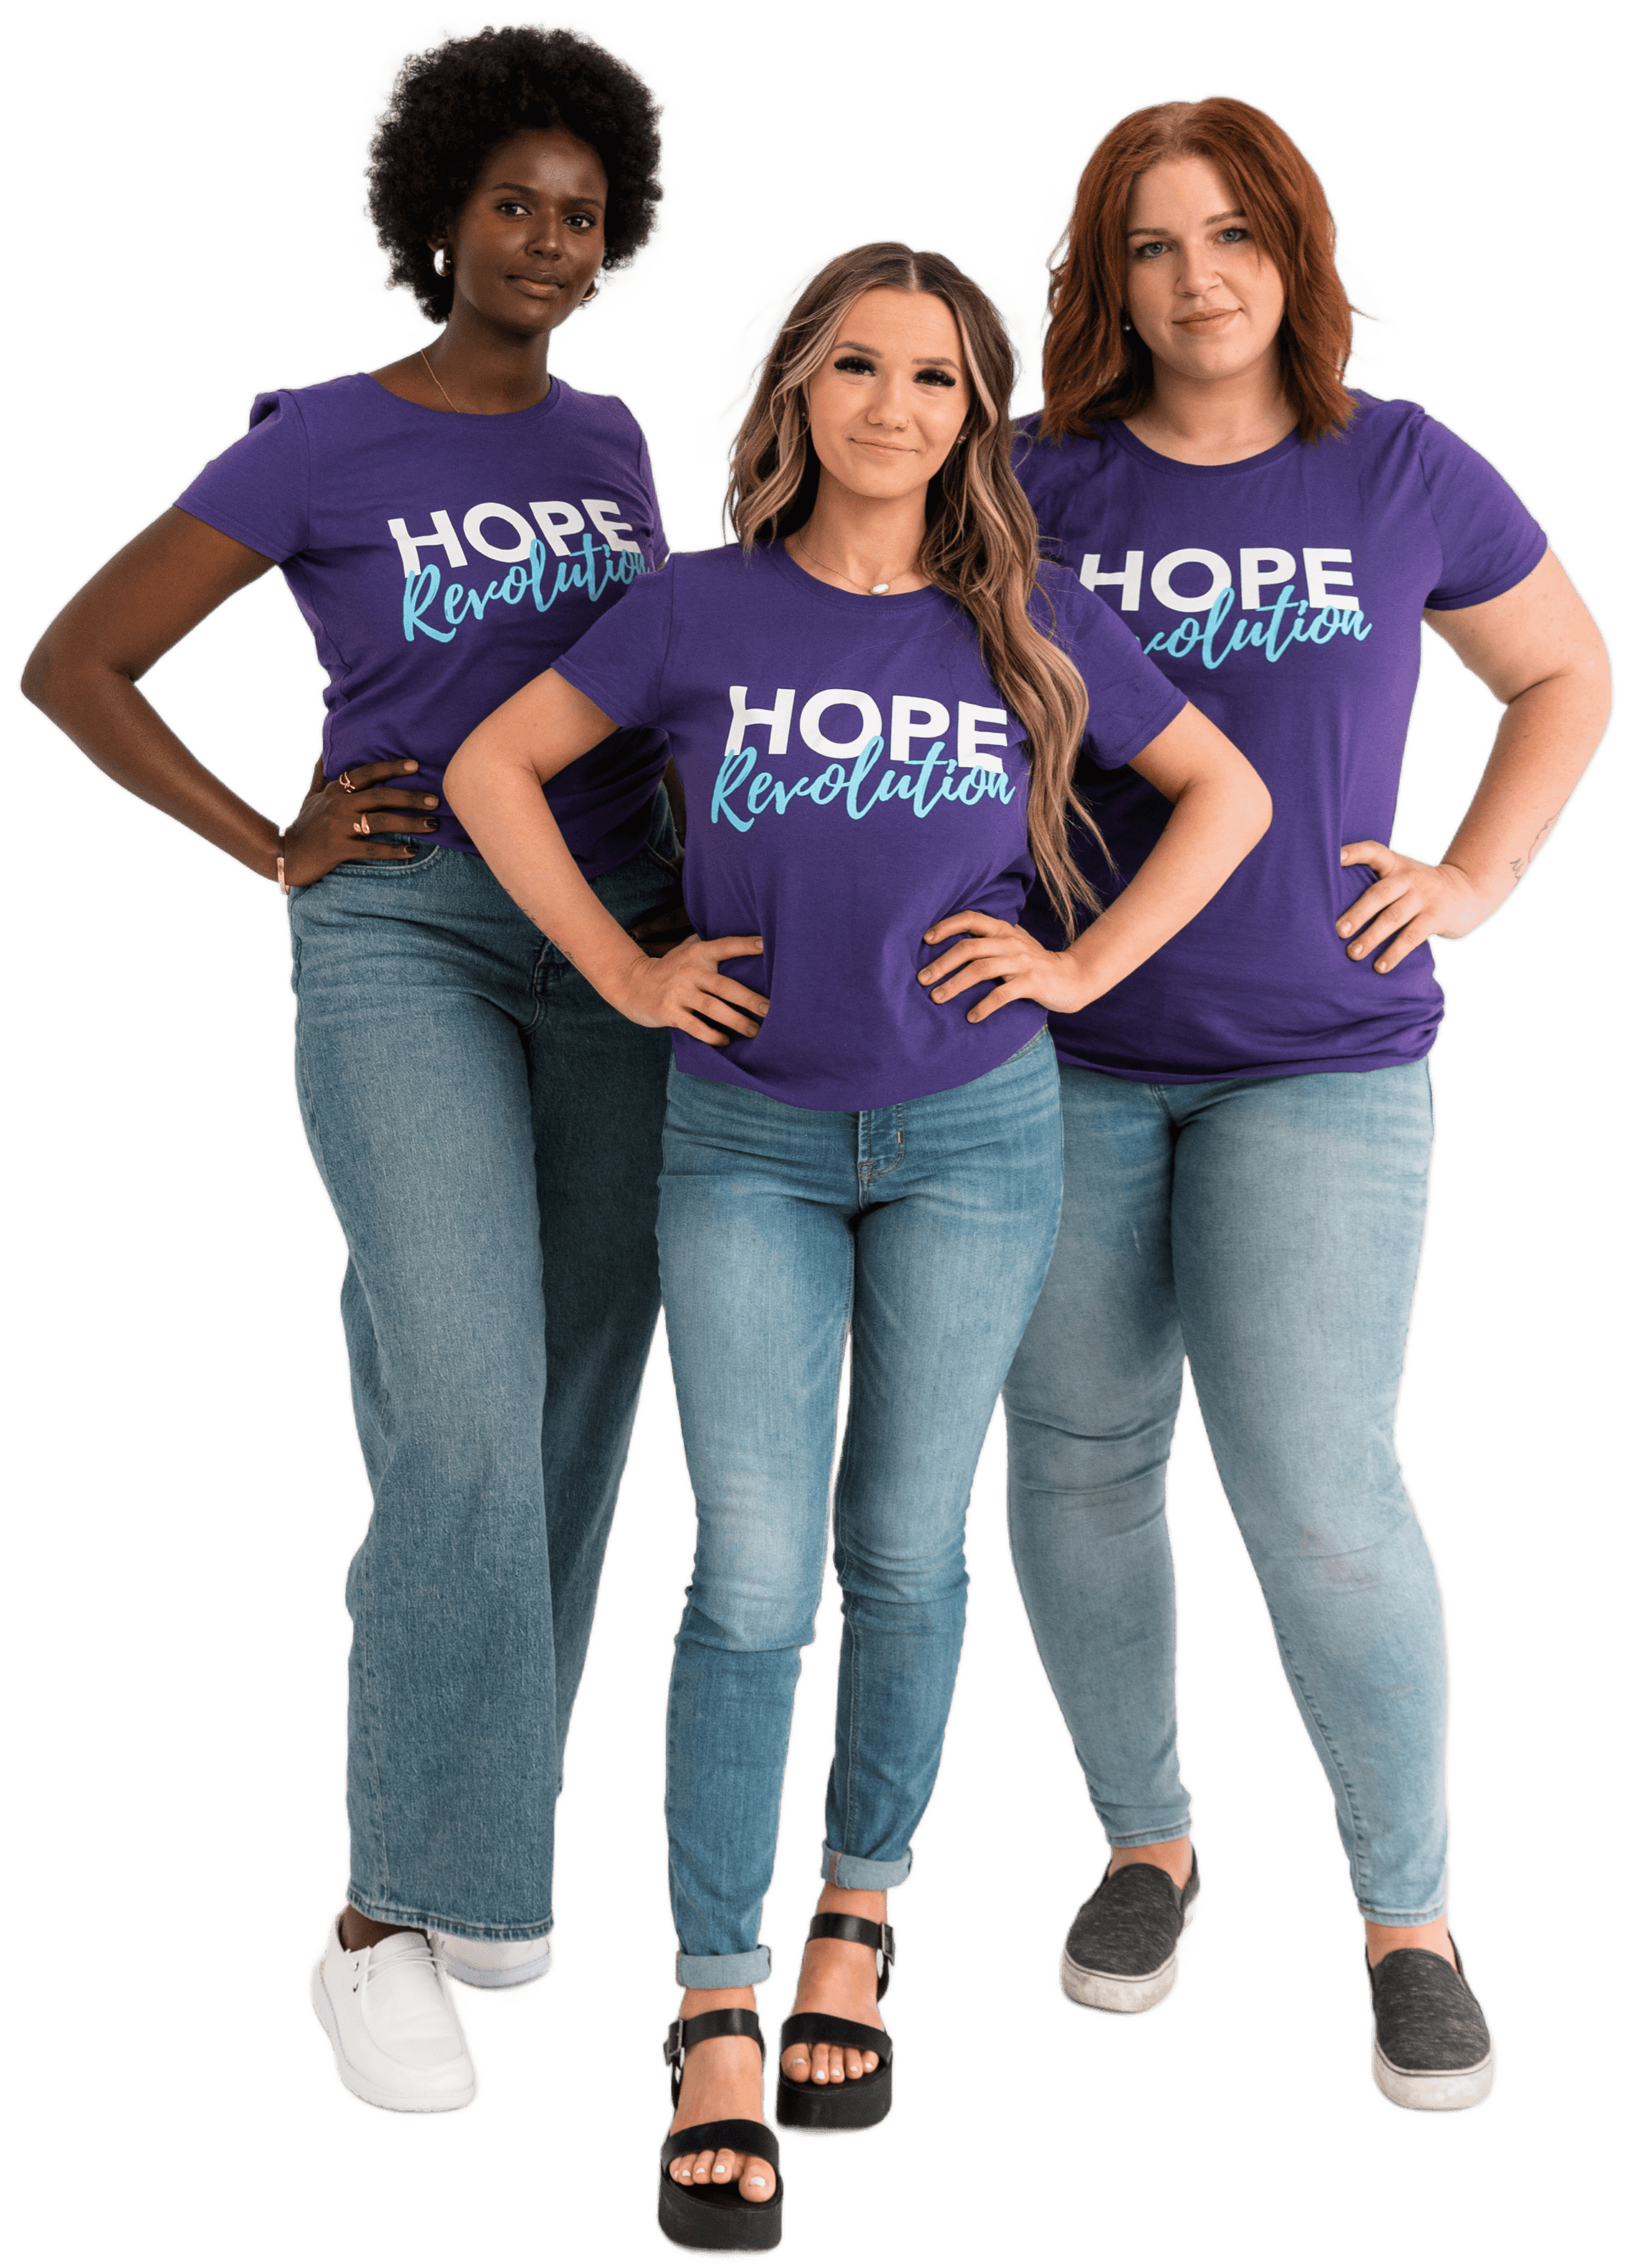 Three women wearing purple Stanton shirts